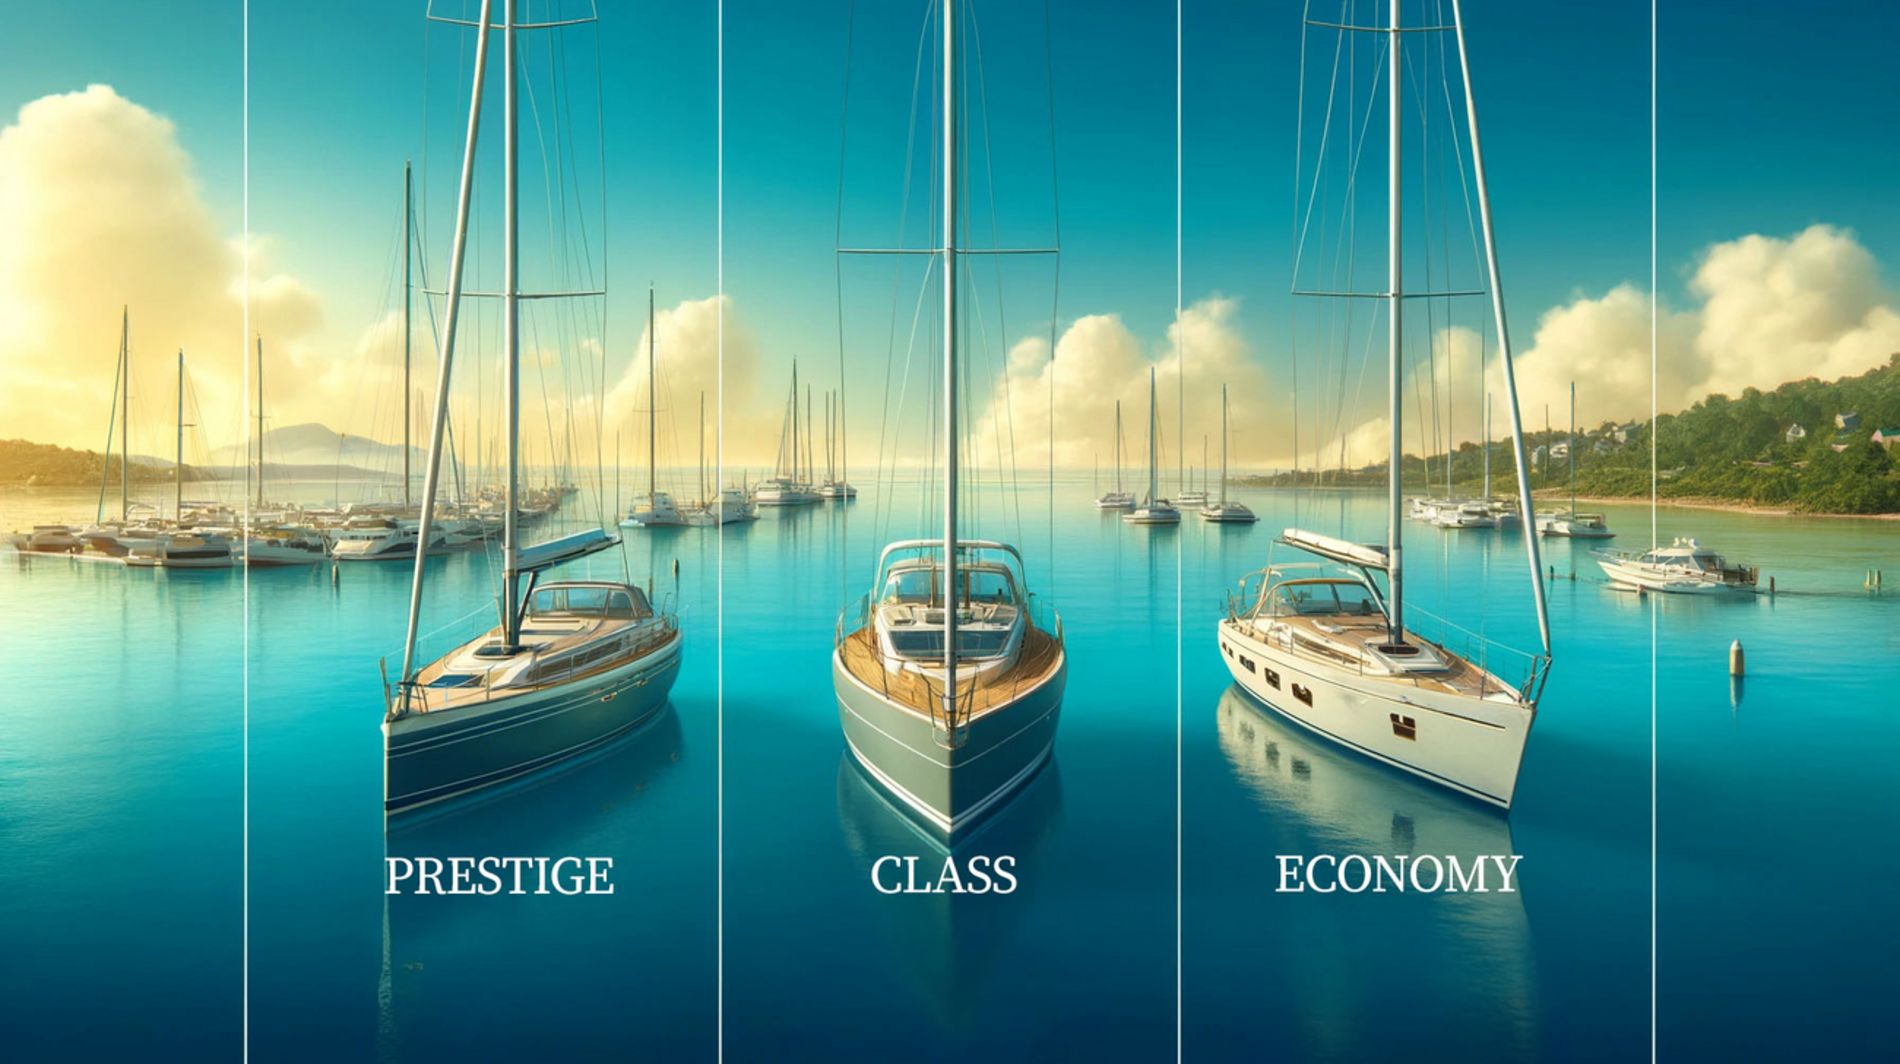 Boat Categories: Prestige - Class - Economy